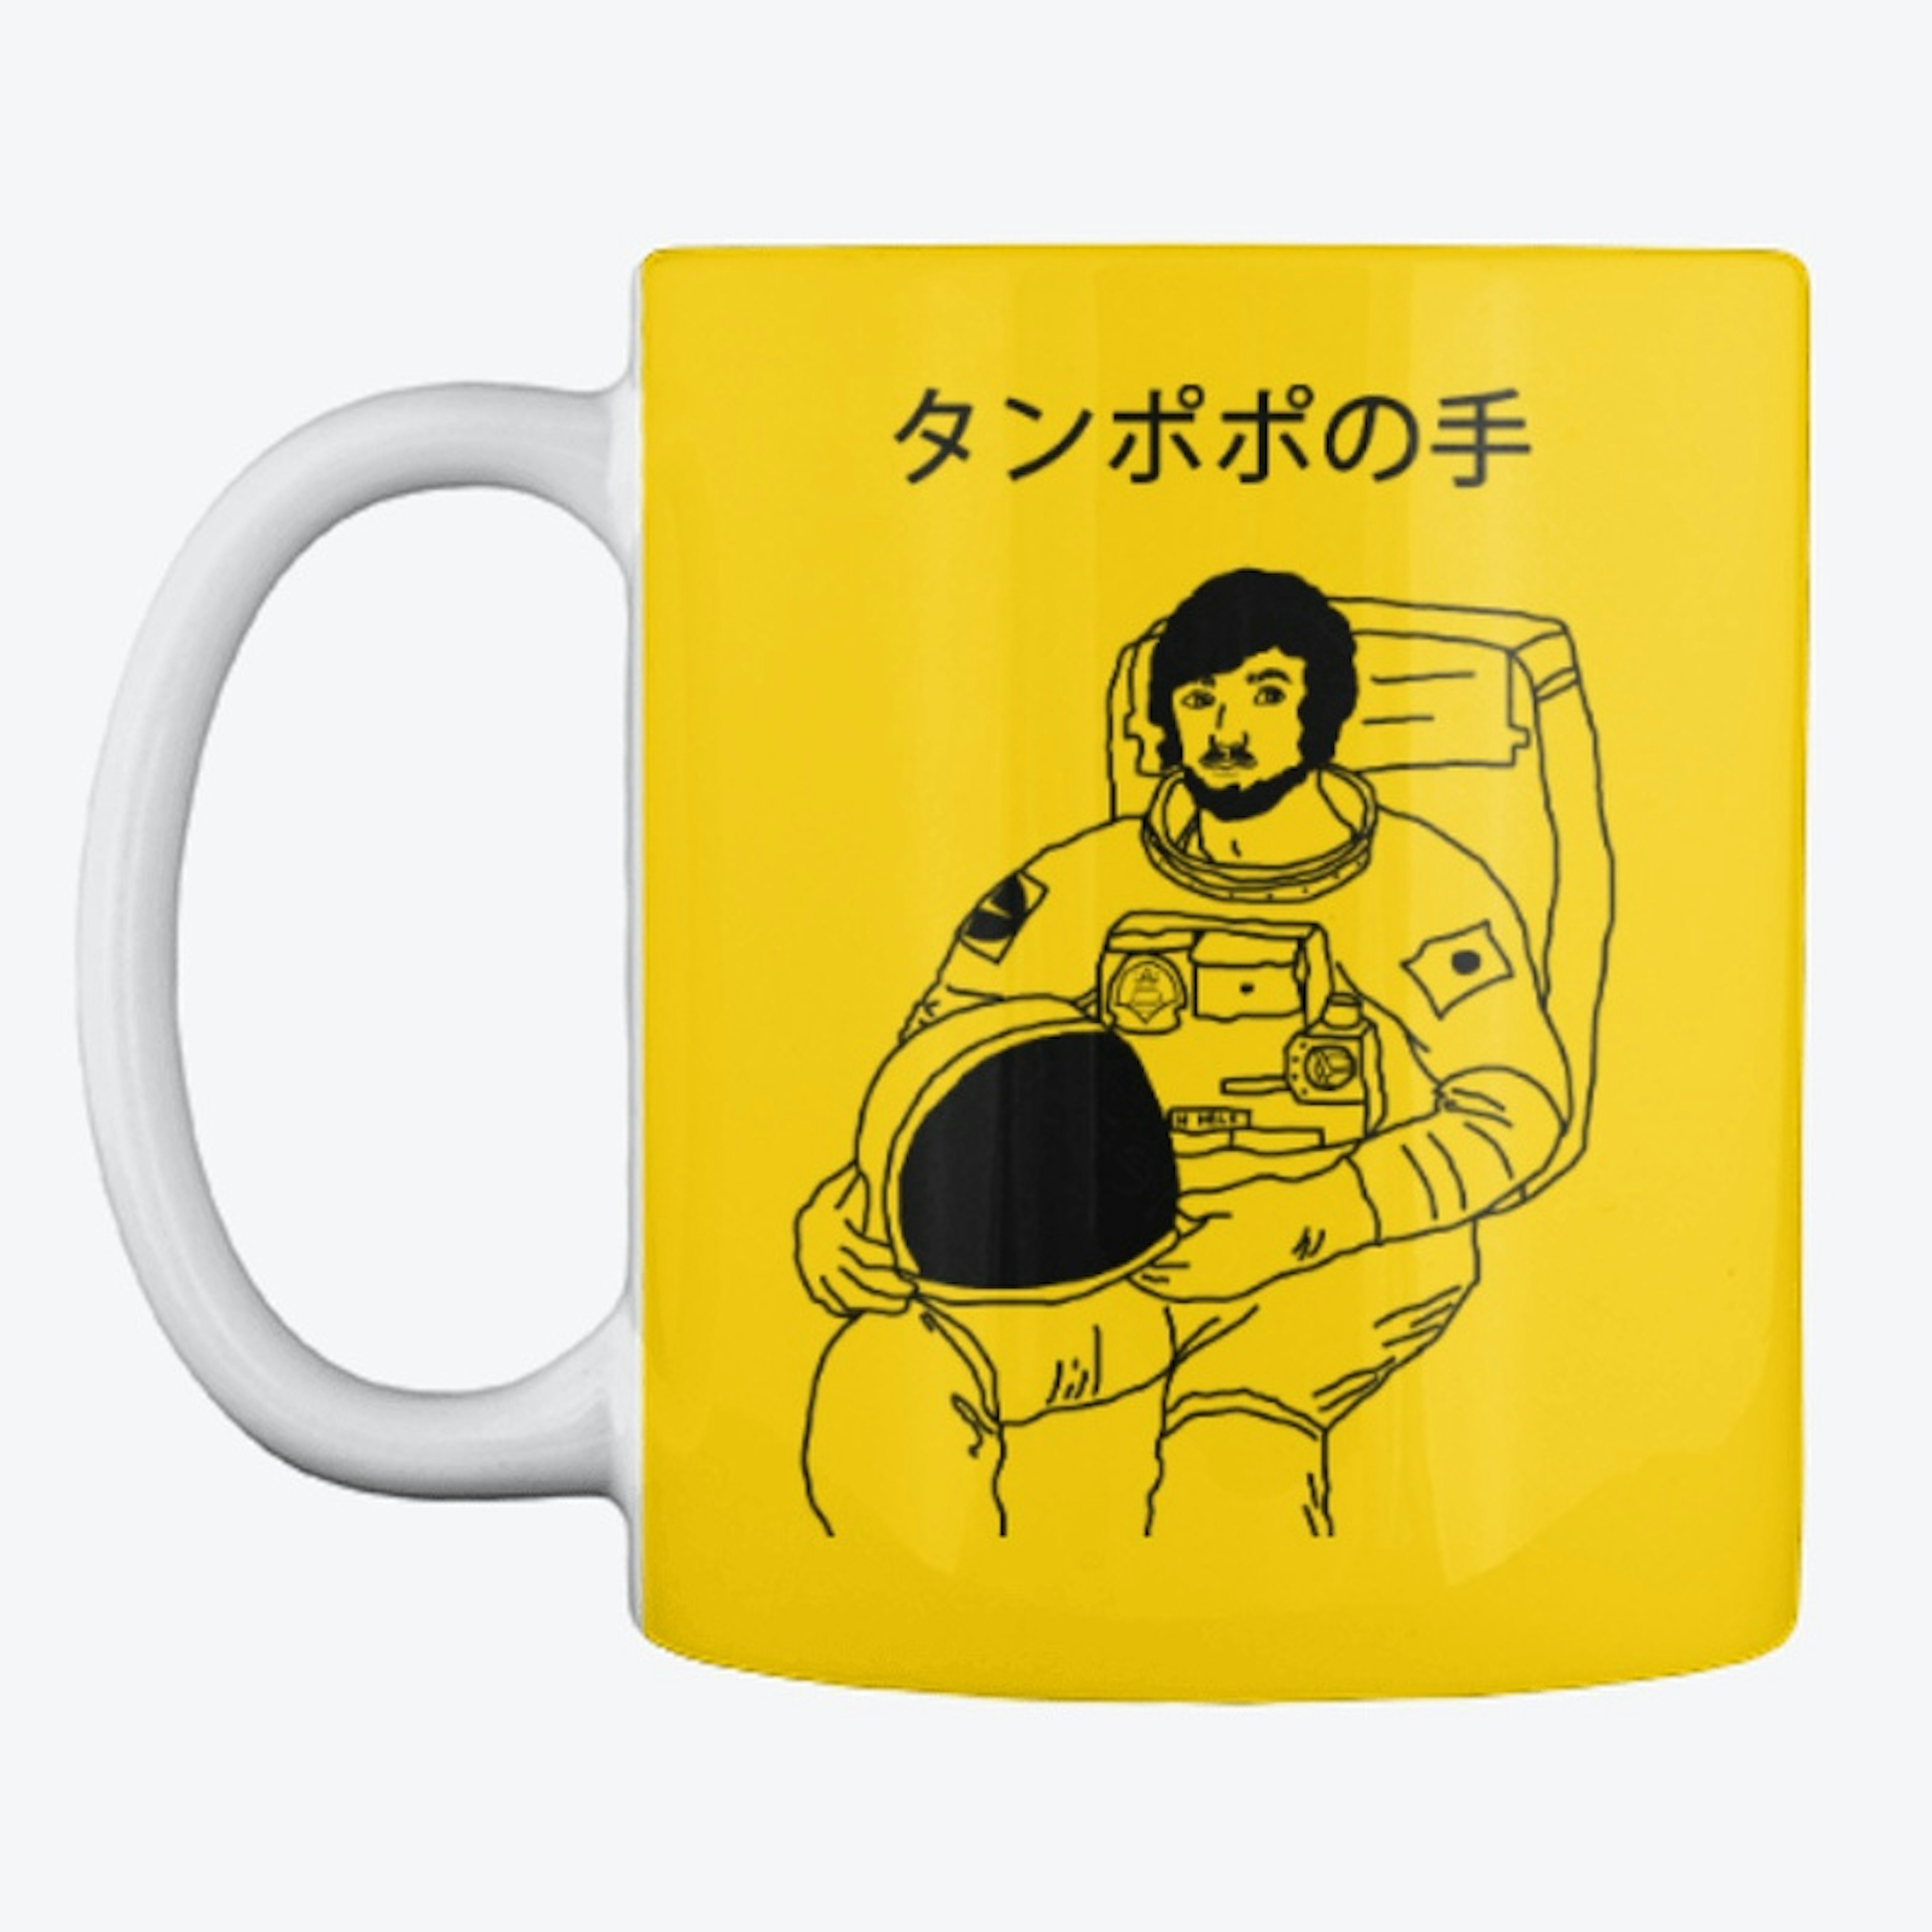 astro mug